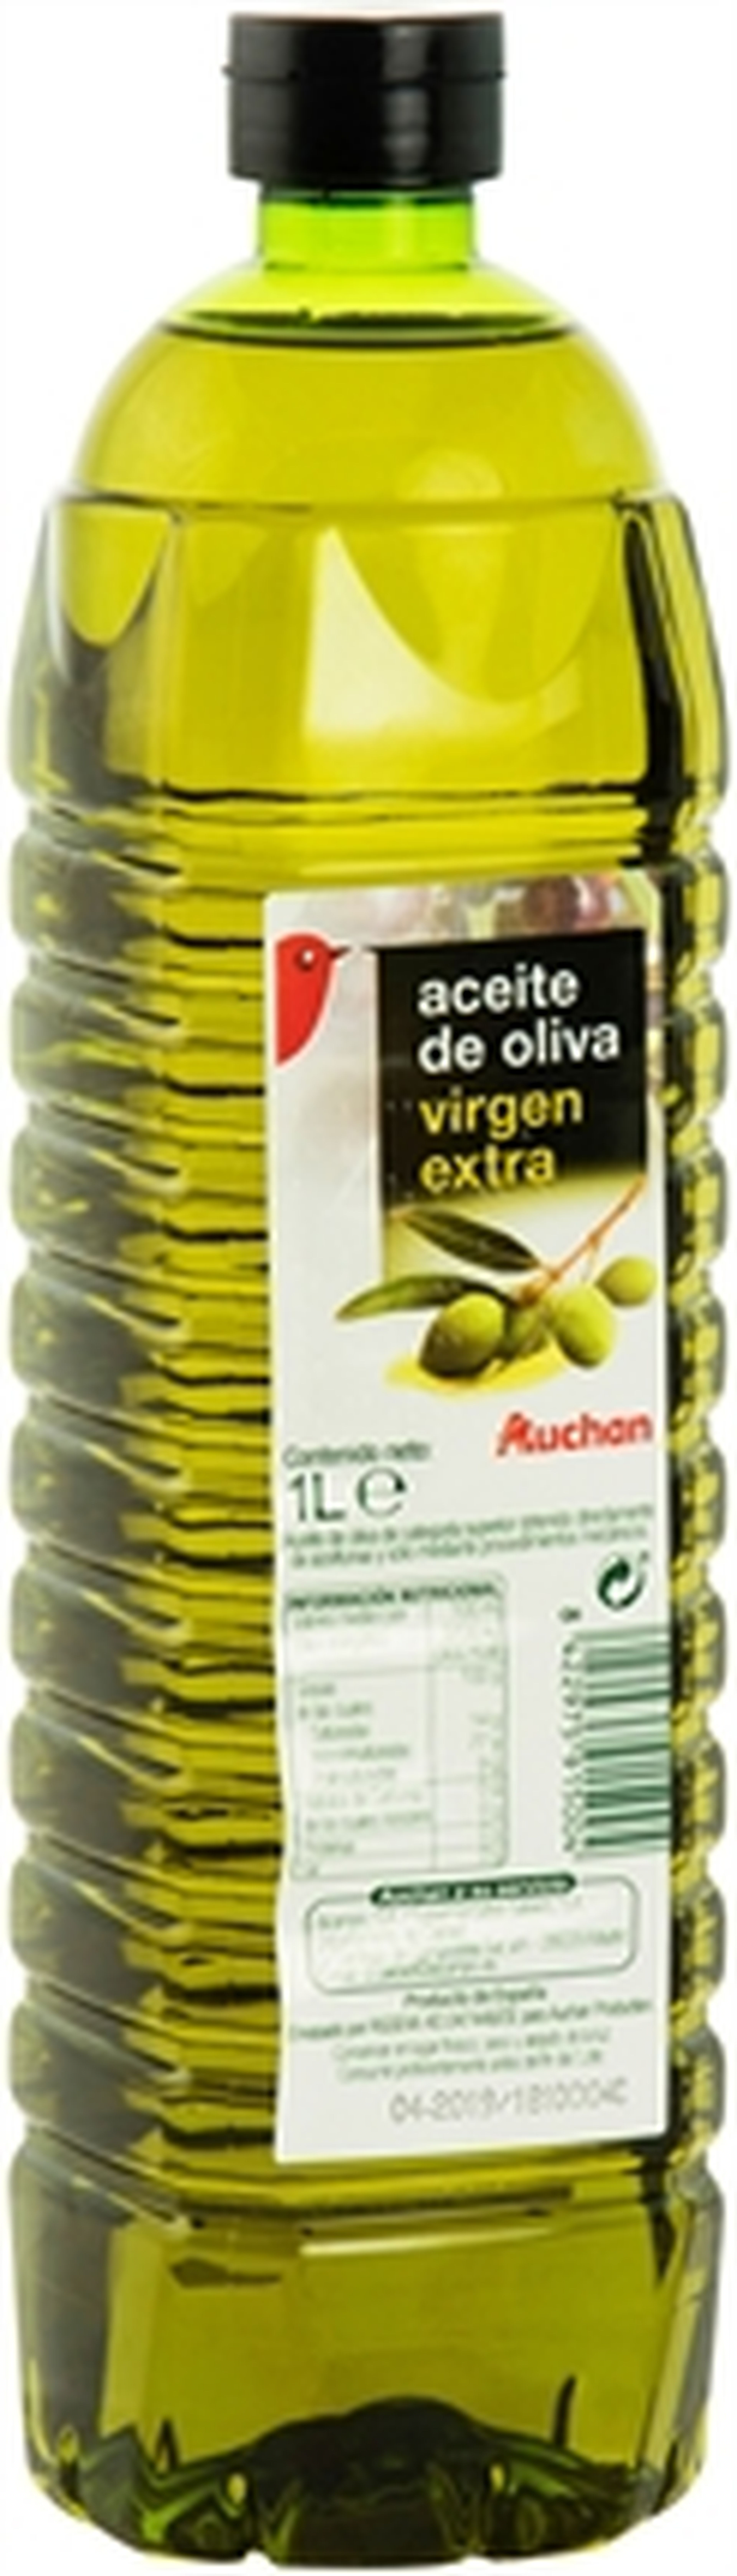 Aceite de oliva virgen extra Auchan